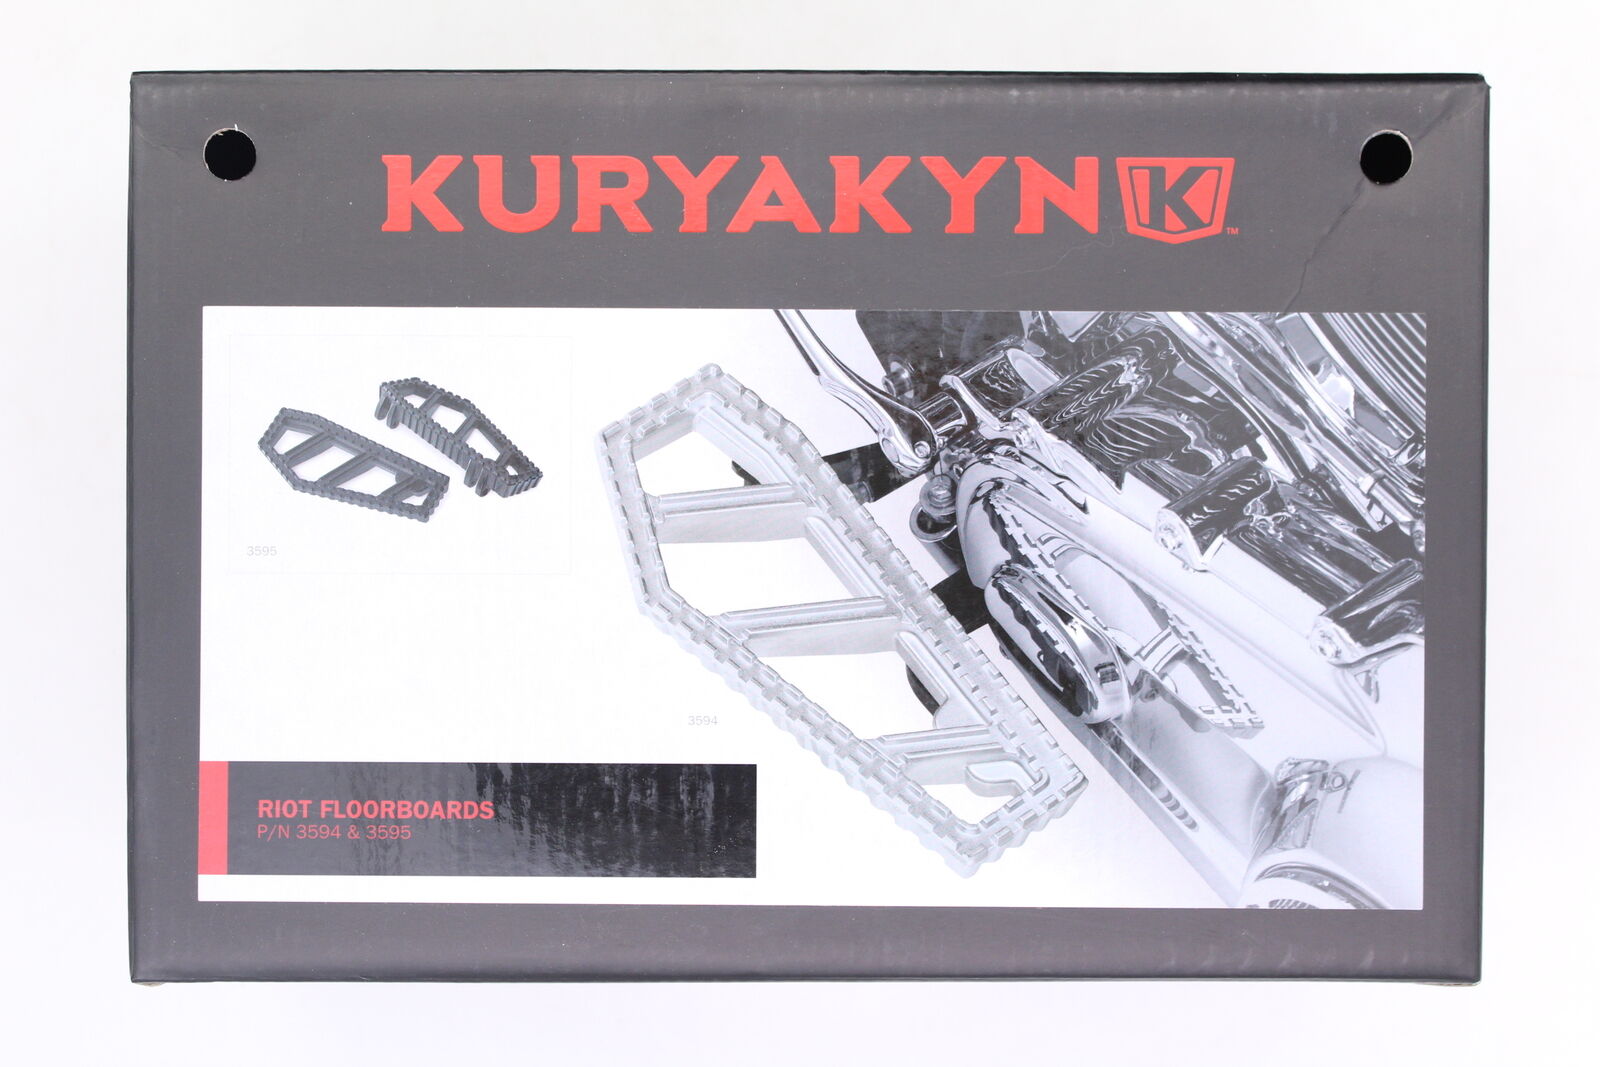 Kuryakyn Riot Floorboards Part Number - 3594